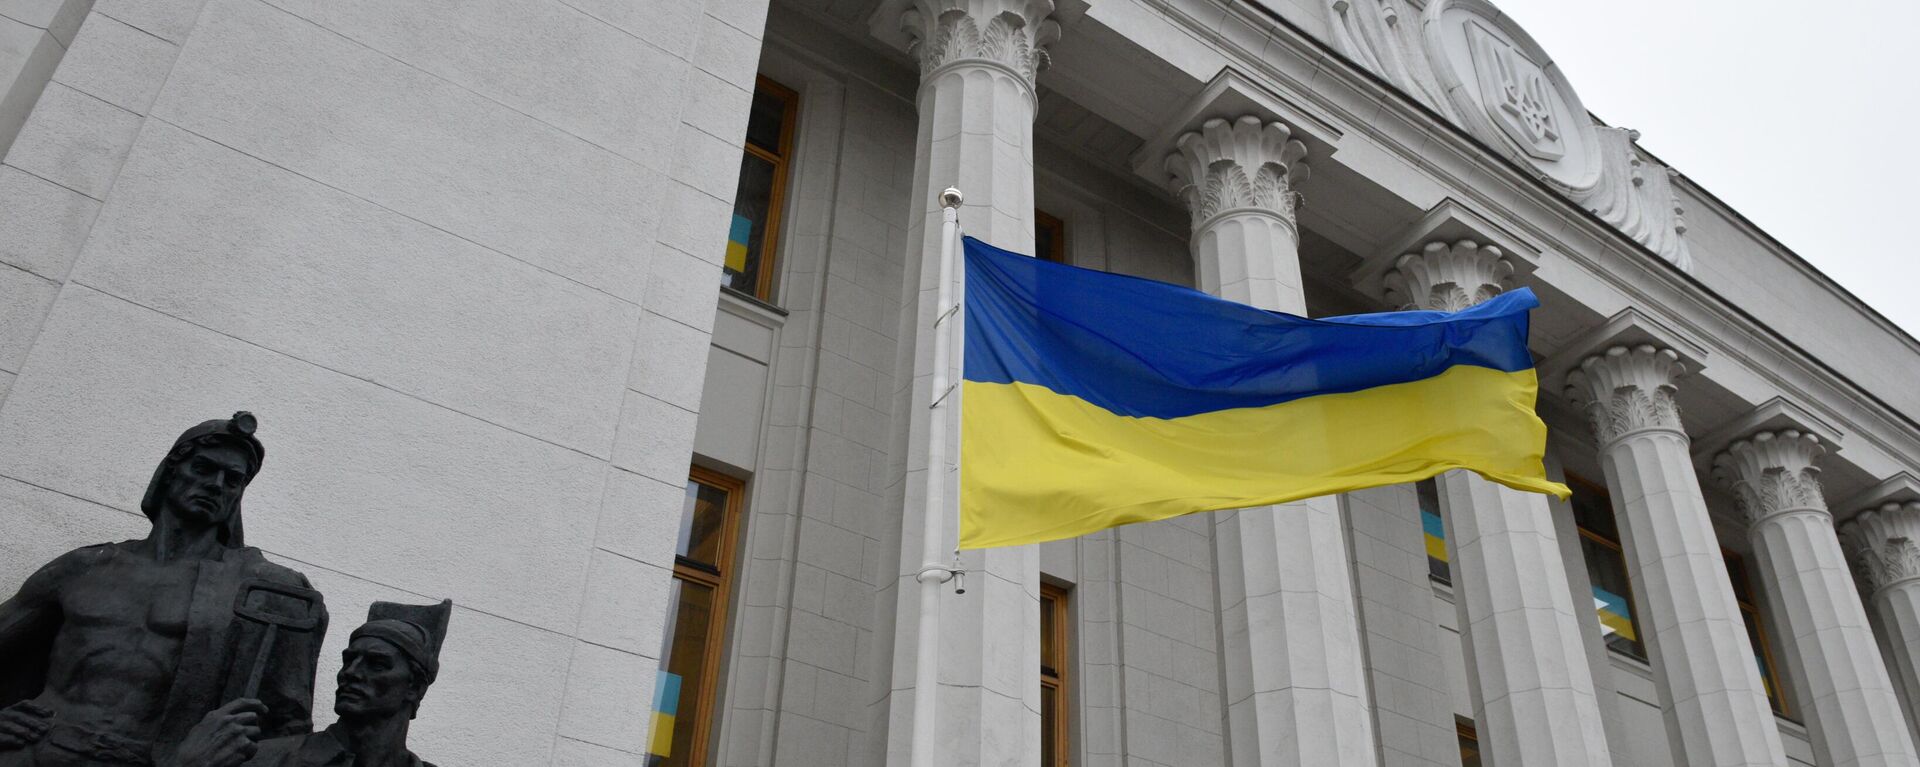 La bandera nacional de Ucrania ondea cerca del edificio de la Rada Suprema  - Sputnik Mundo, 1920, 13.08.2022